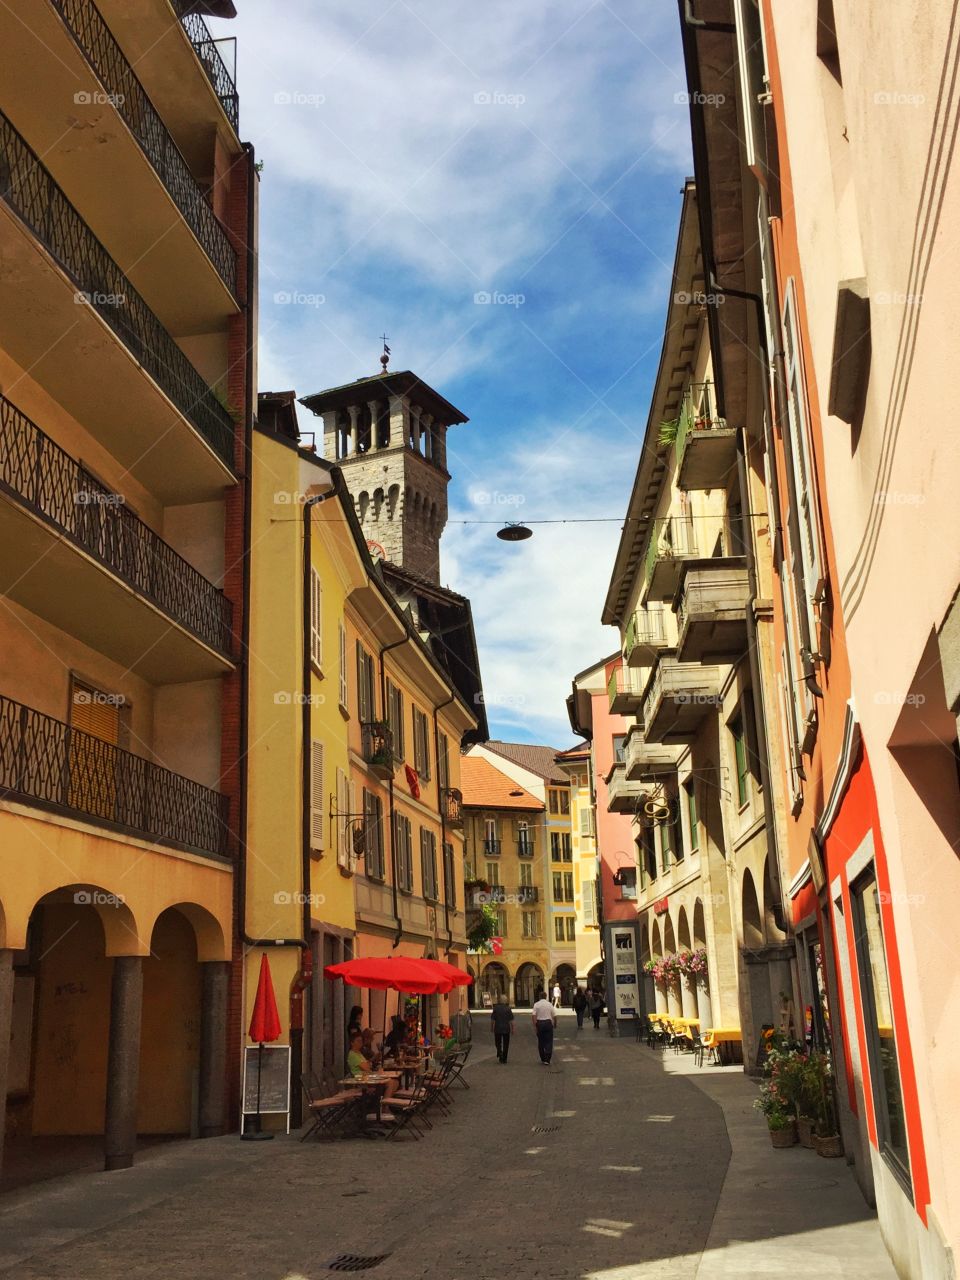 Via Camminata in Bellinzona, Switzerland 